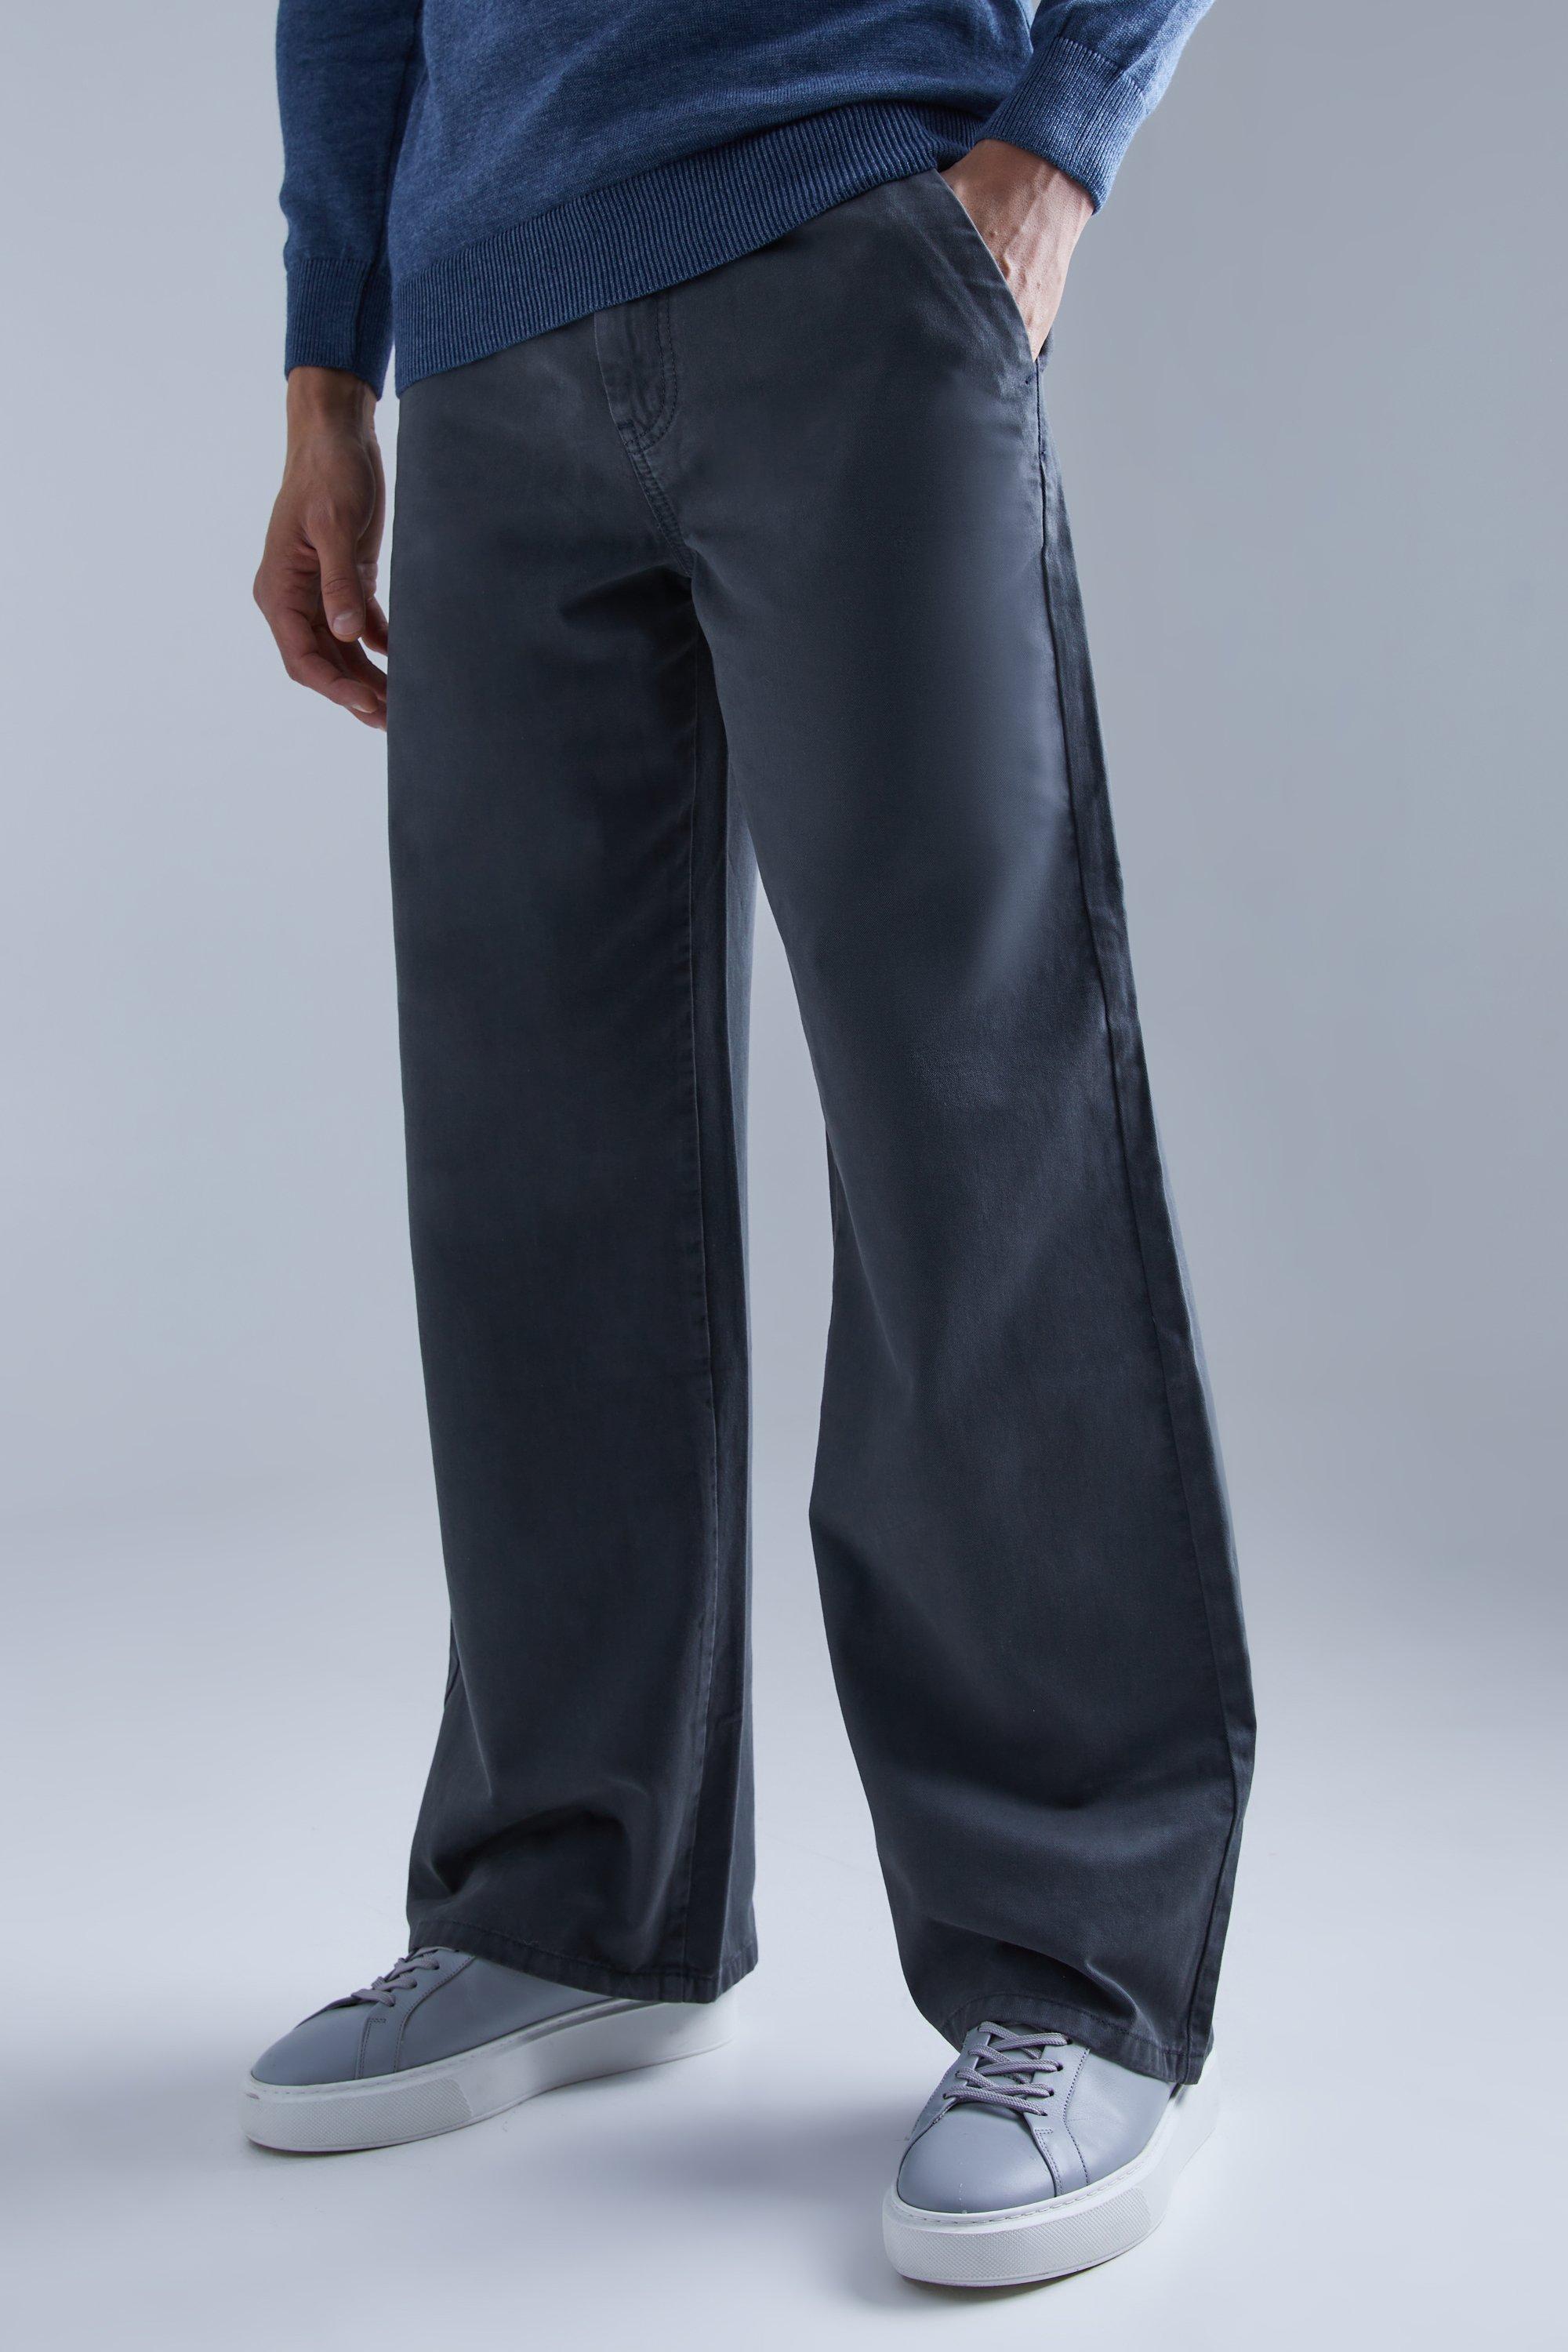 pantalon chino large homme - gris - 28, gris